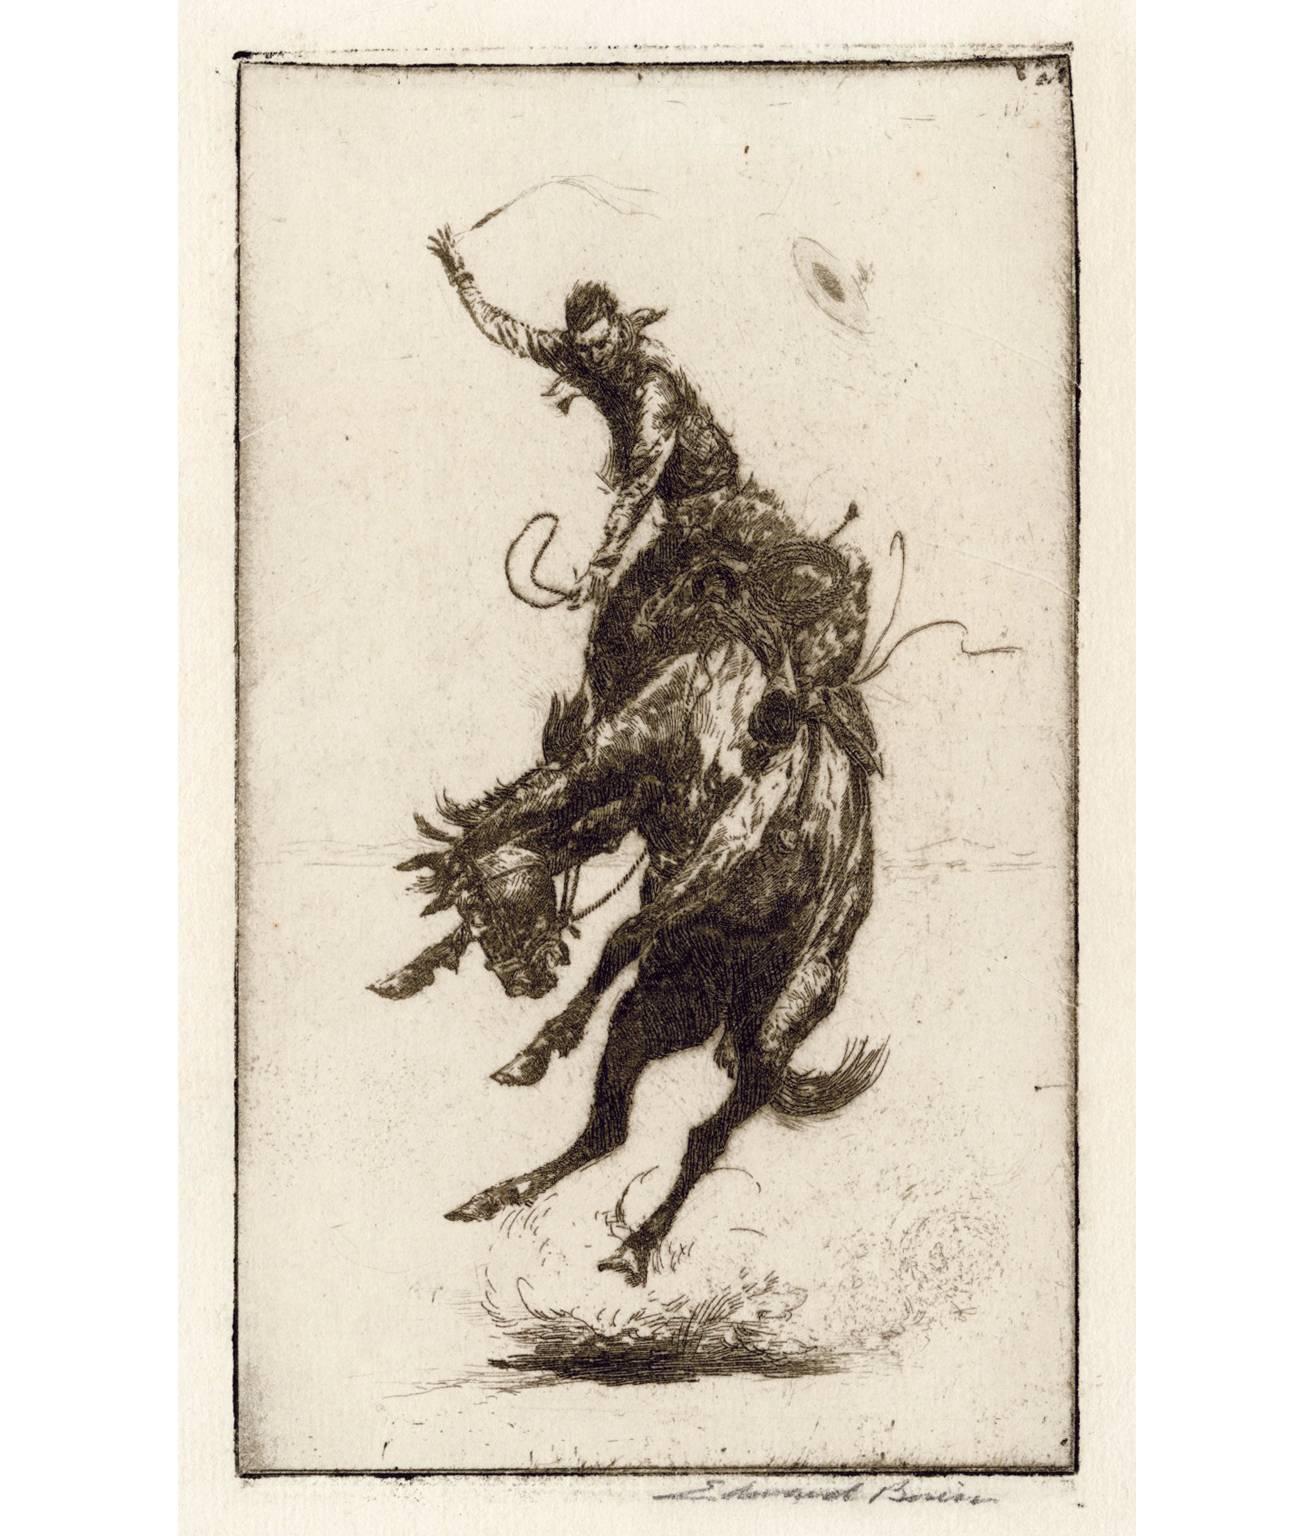 Edward Borein Figurative Print - 'Scratchin' High' — early American rodeo